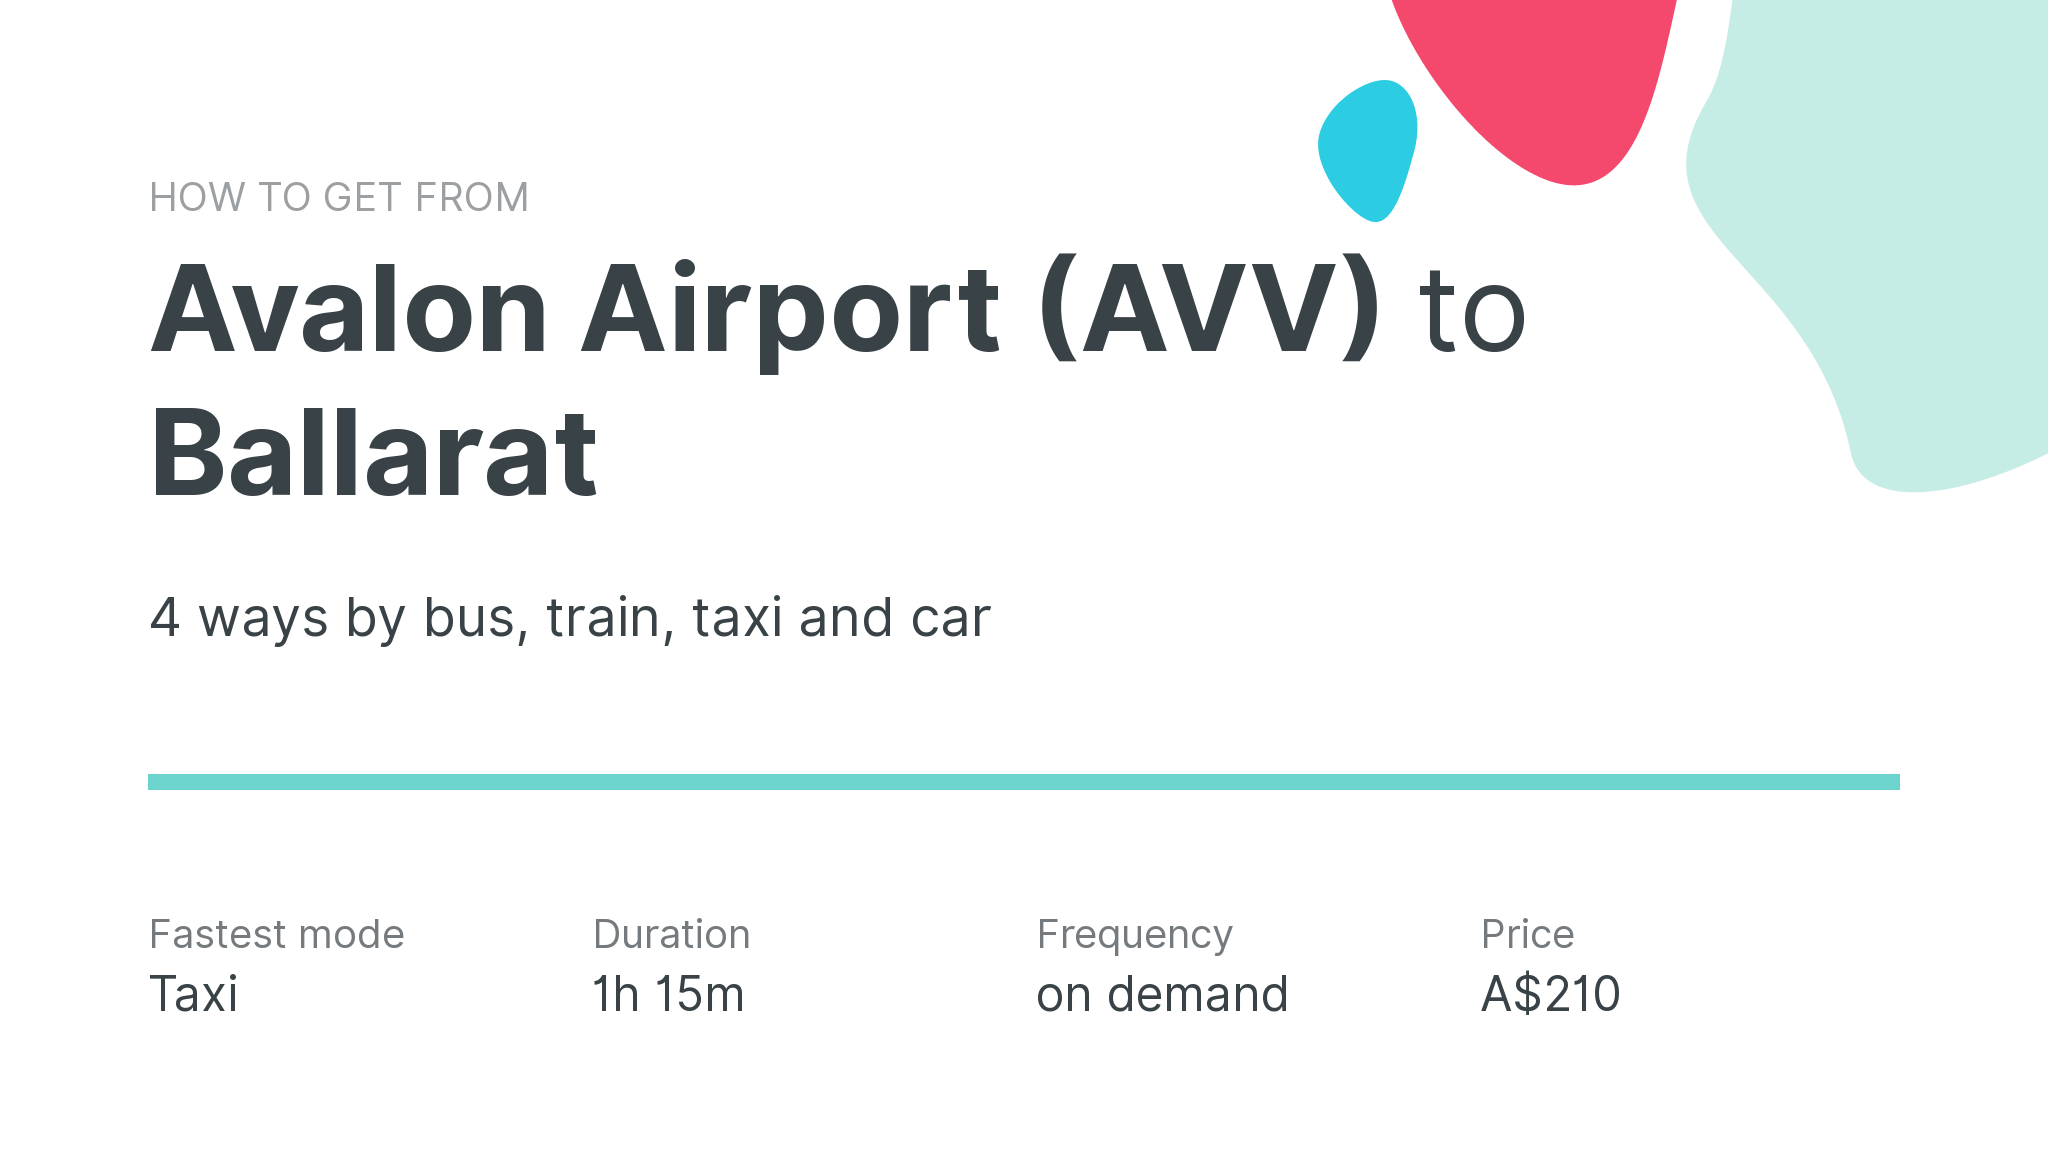 How do I get from Avalon Airport (AVV) to Ballarat